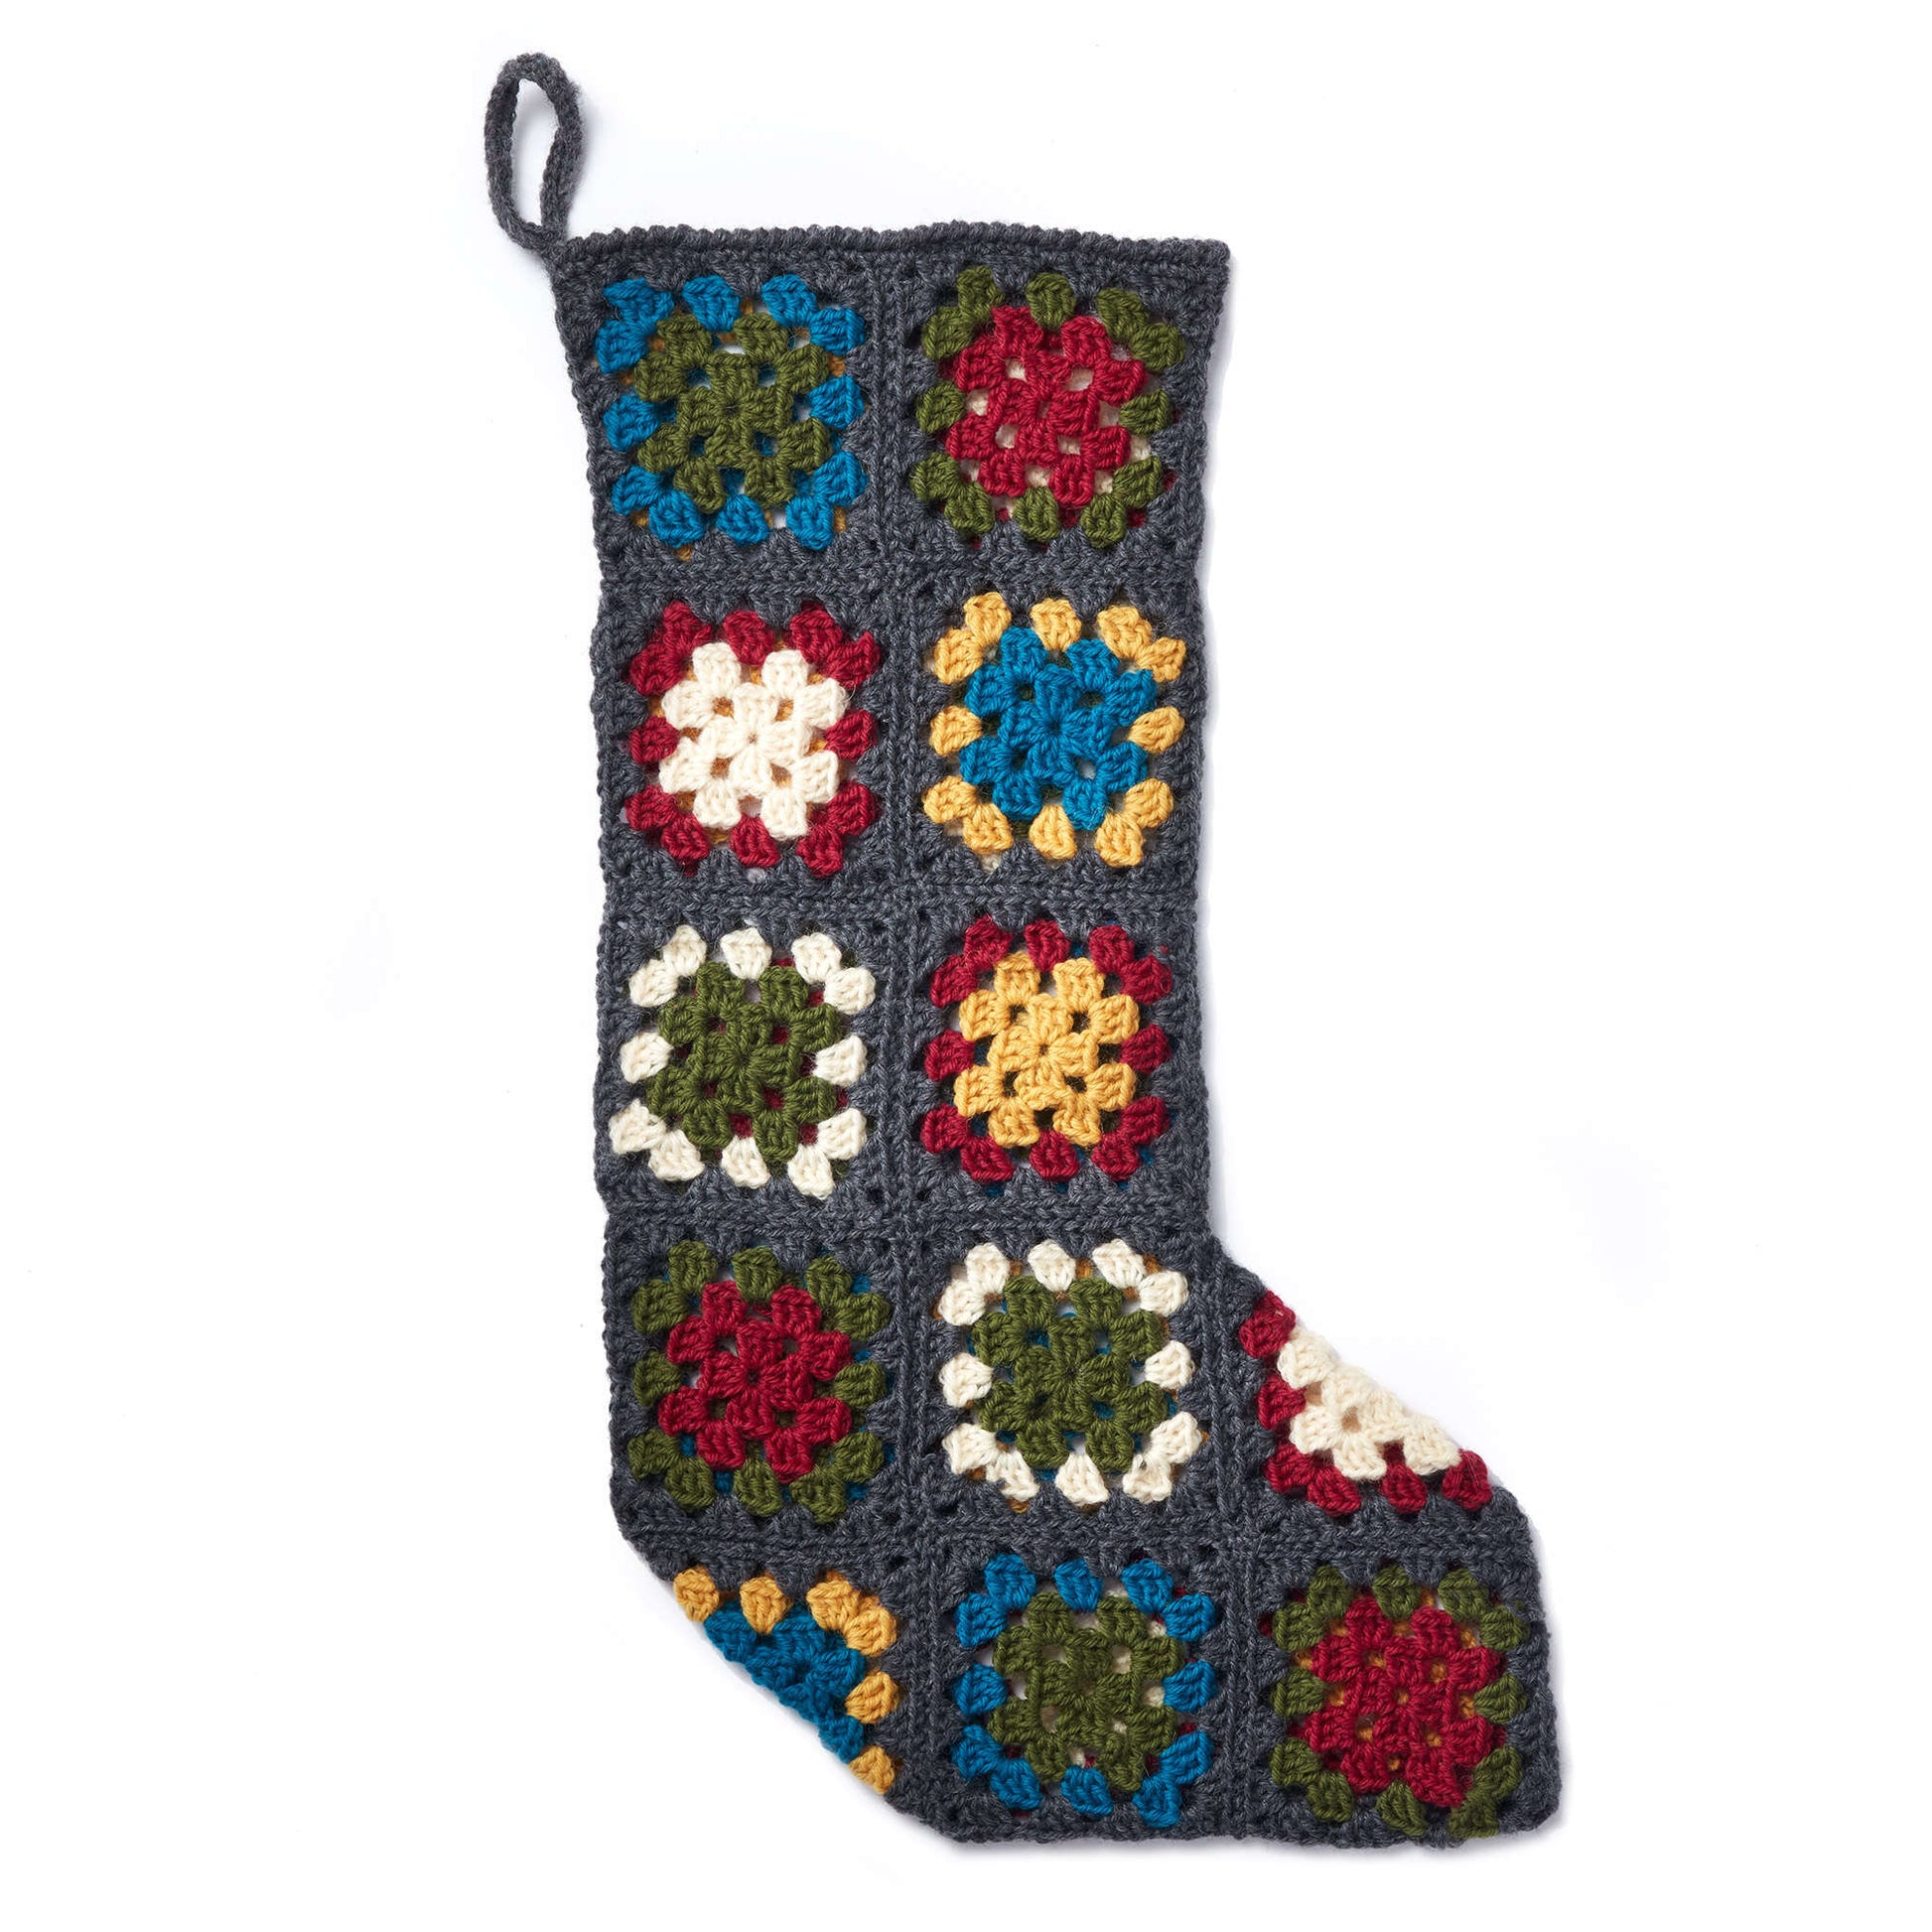 Patons Crochet Granny Square Stocking Single Size